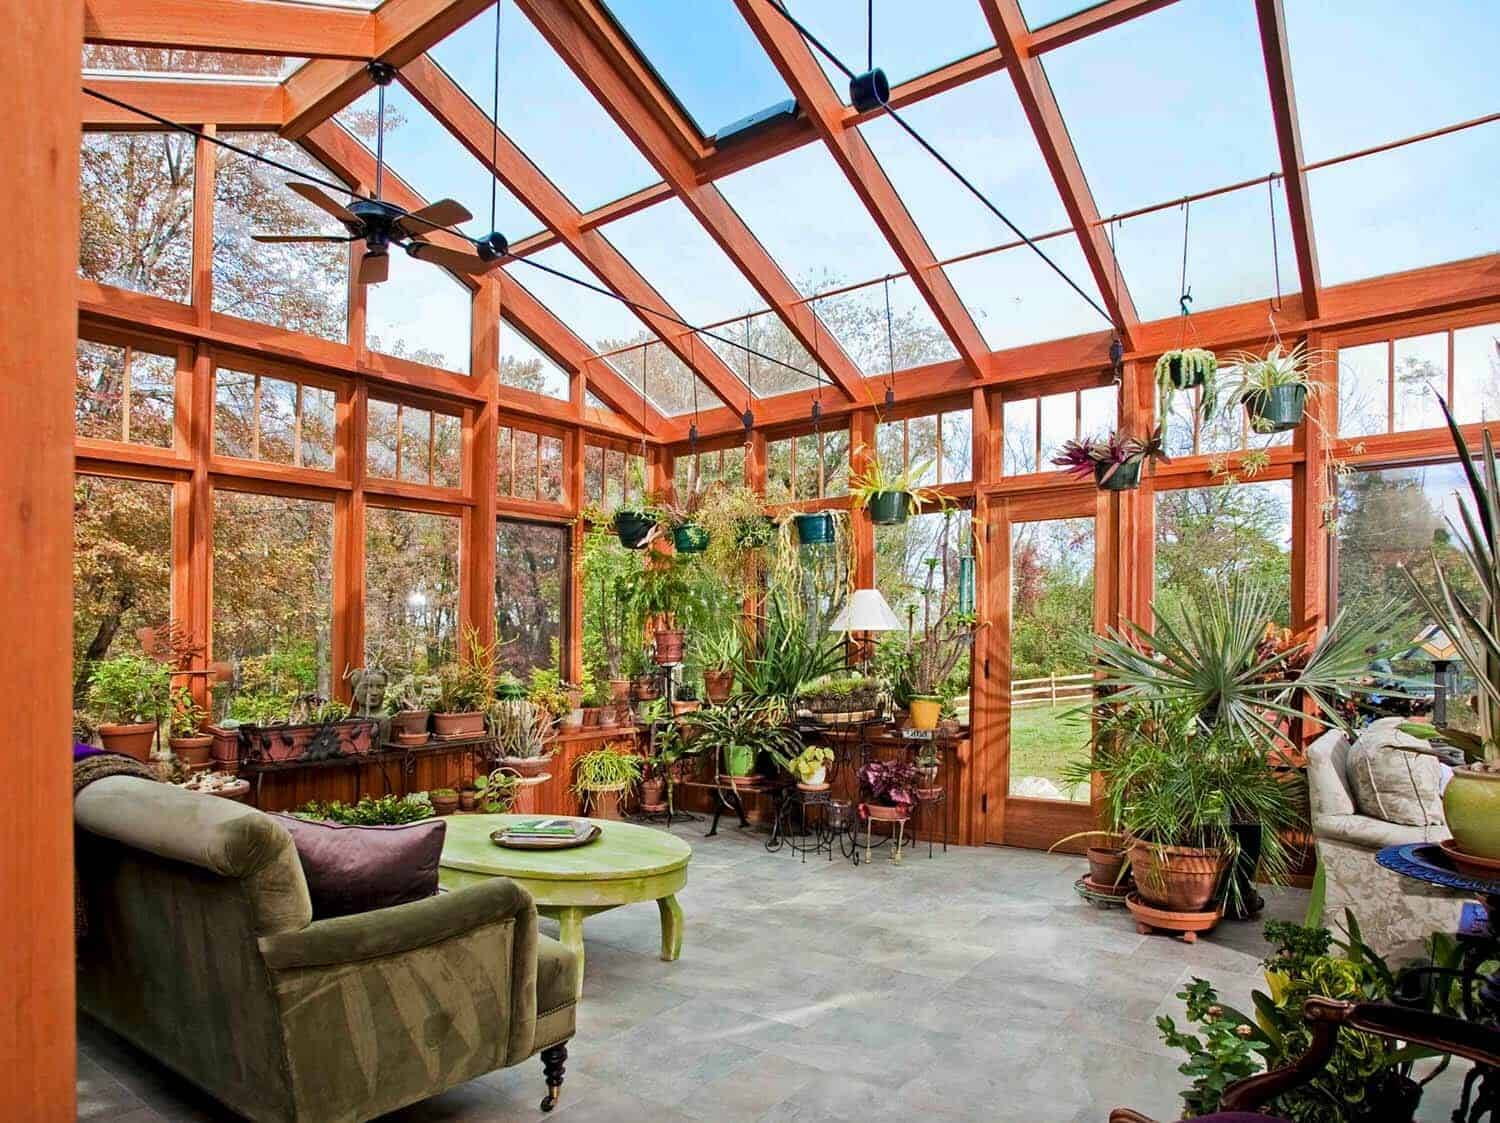 Amazing Conservatory Greenhouse Ideas